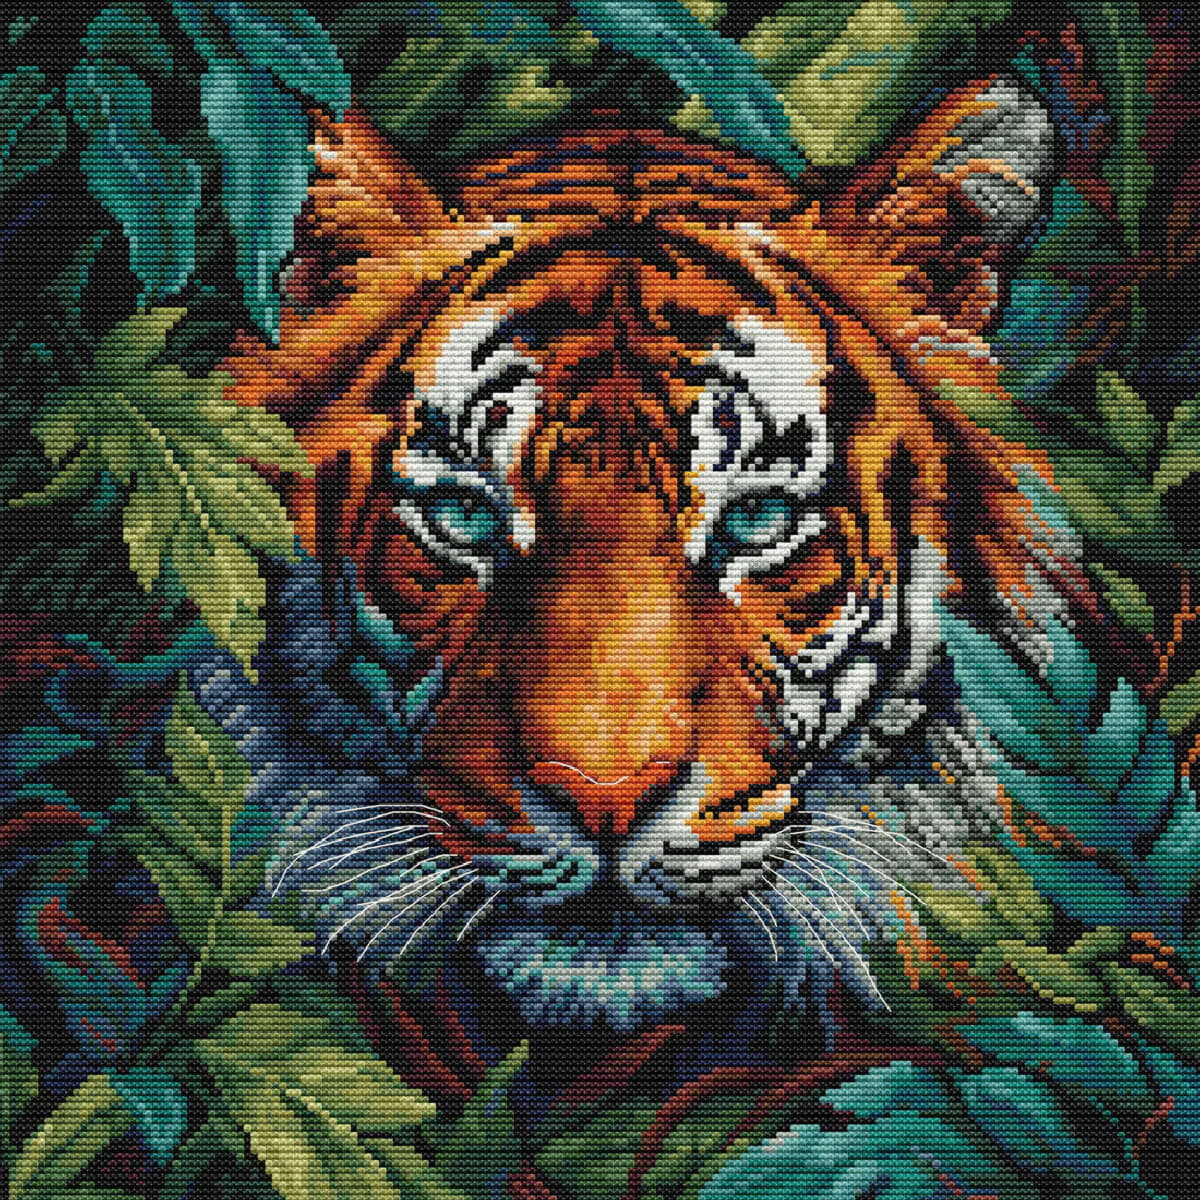 A colorful, detailed digital illustration of a tiger...